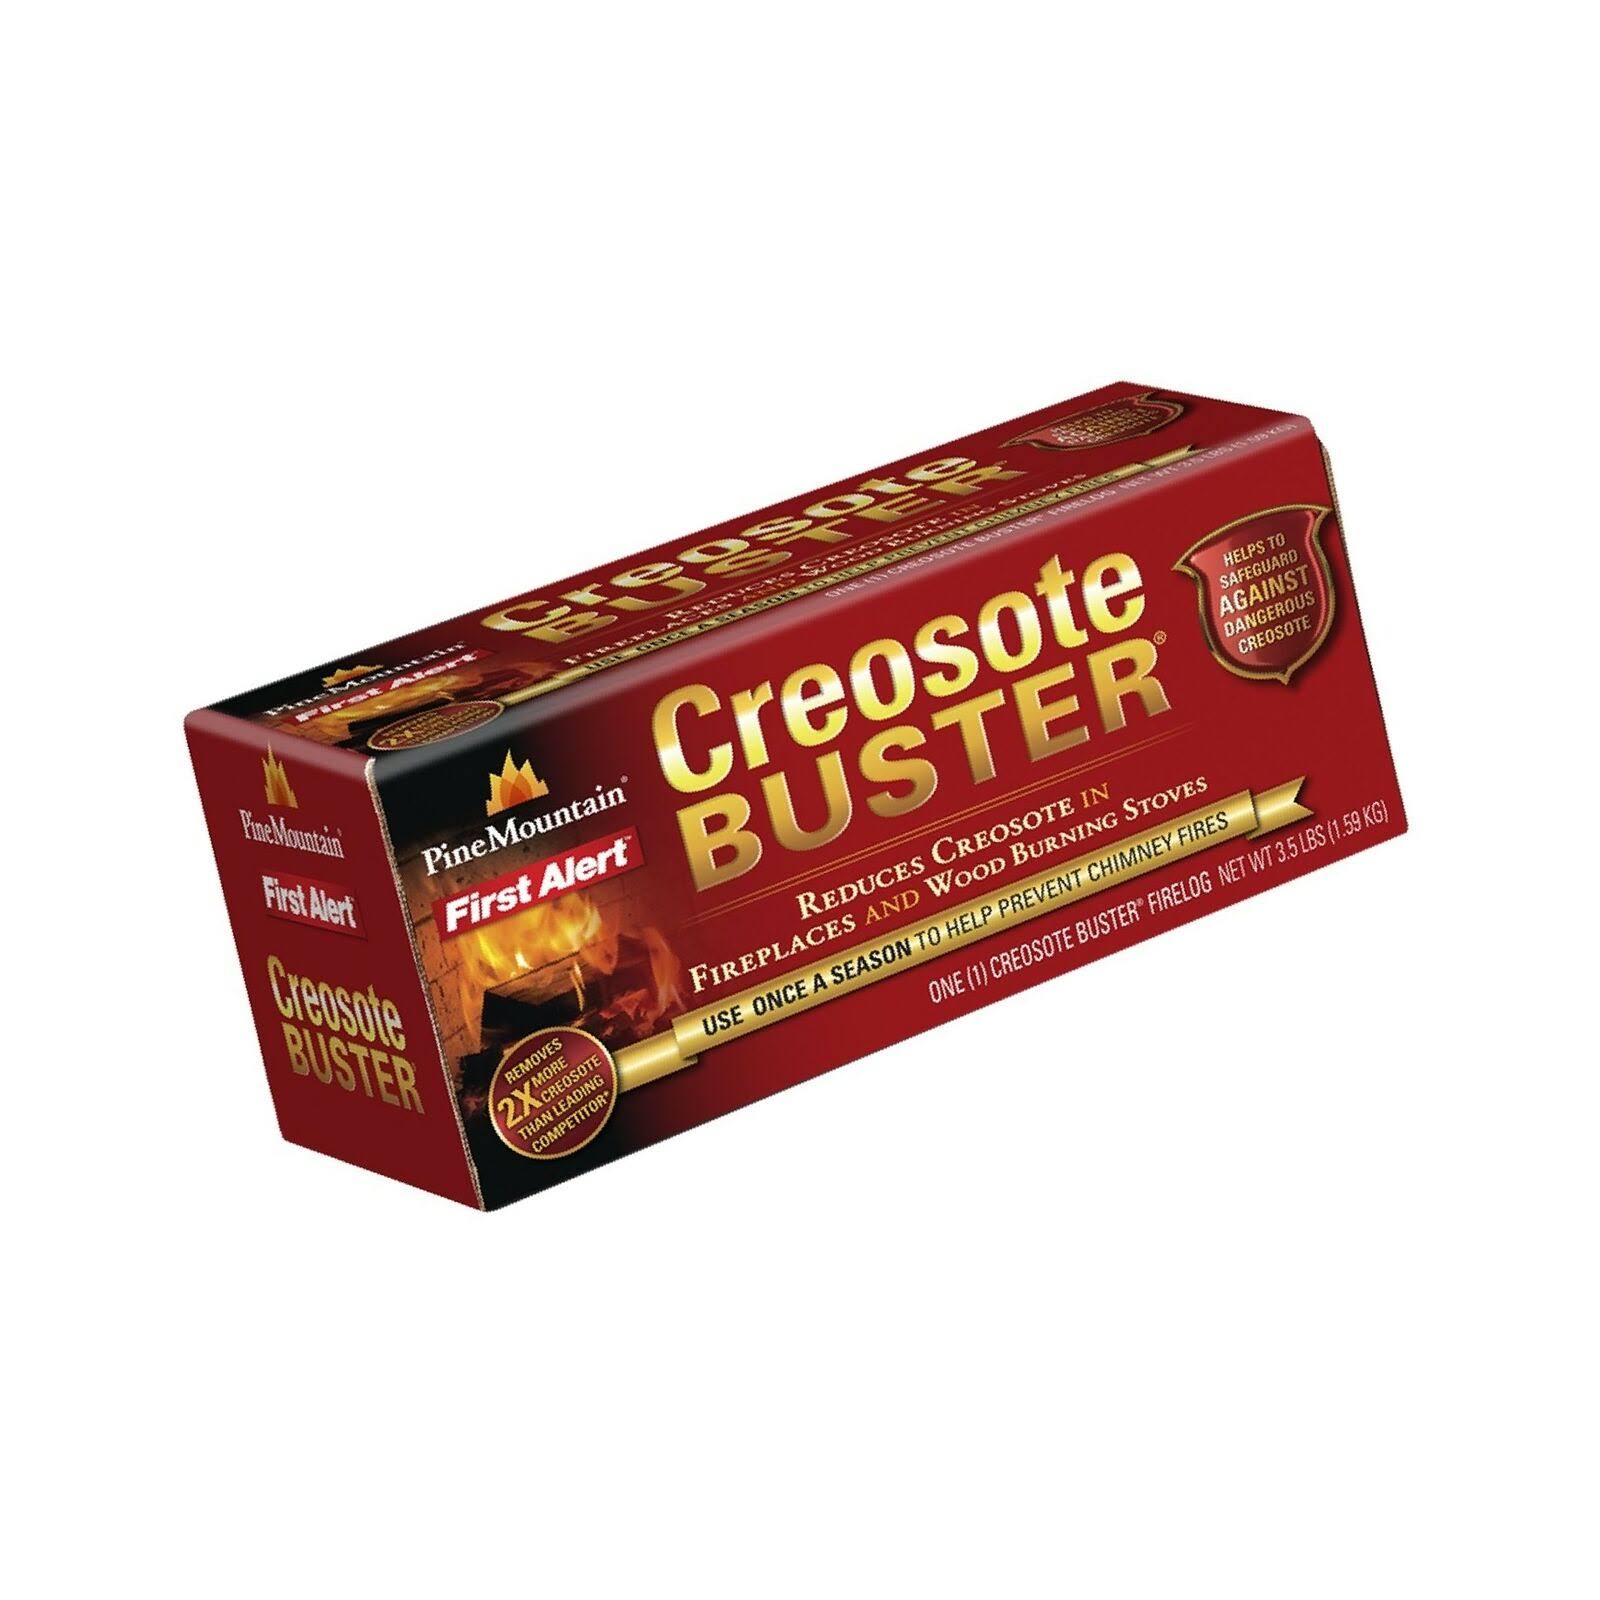 Hearthmark Pine Mountain Creosote Buster Safety Firelog - 4lbs